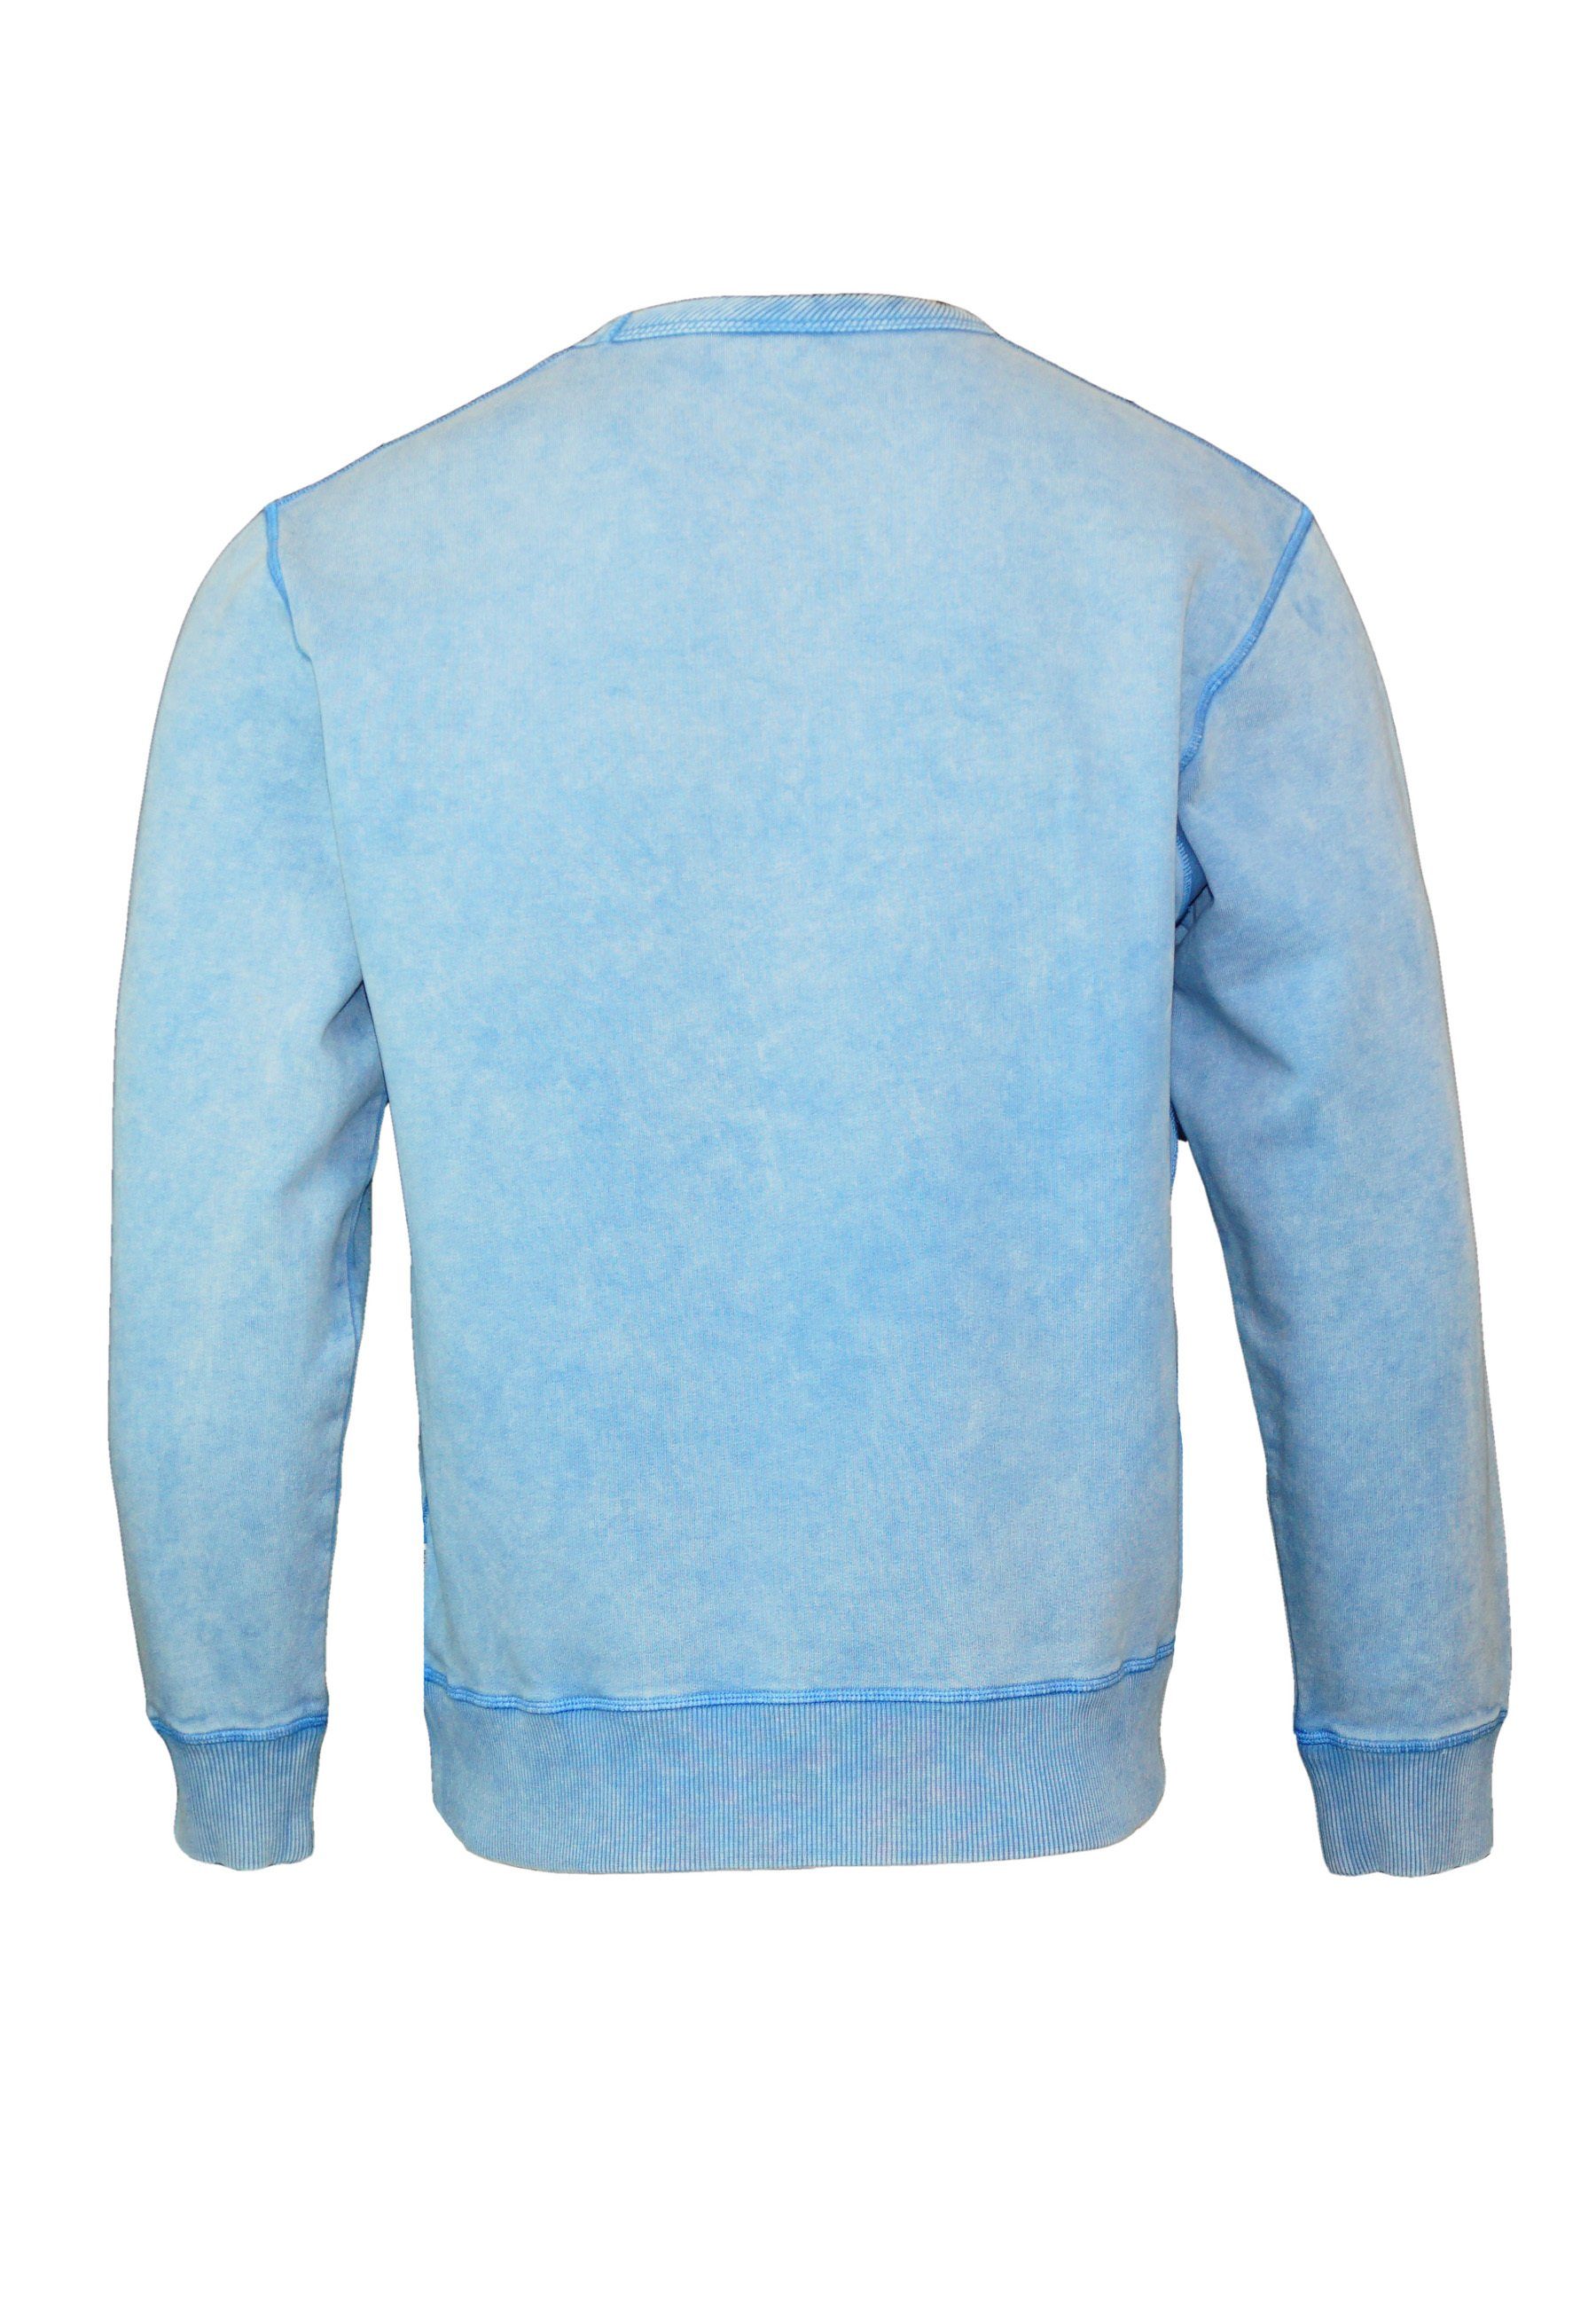 WASH Pullover COTTON Sweatshirt & BRUSHED Sweatshirt ACID Franklin Marshall